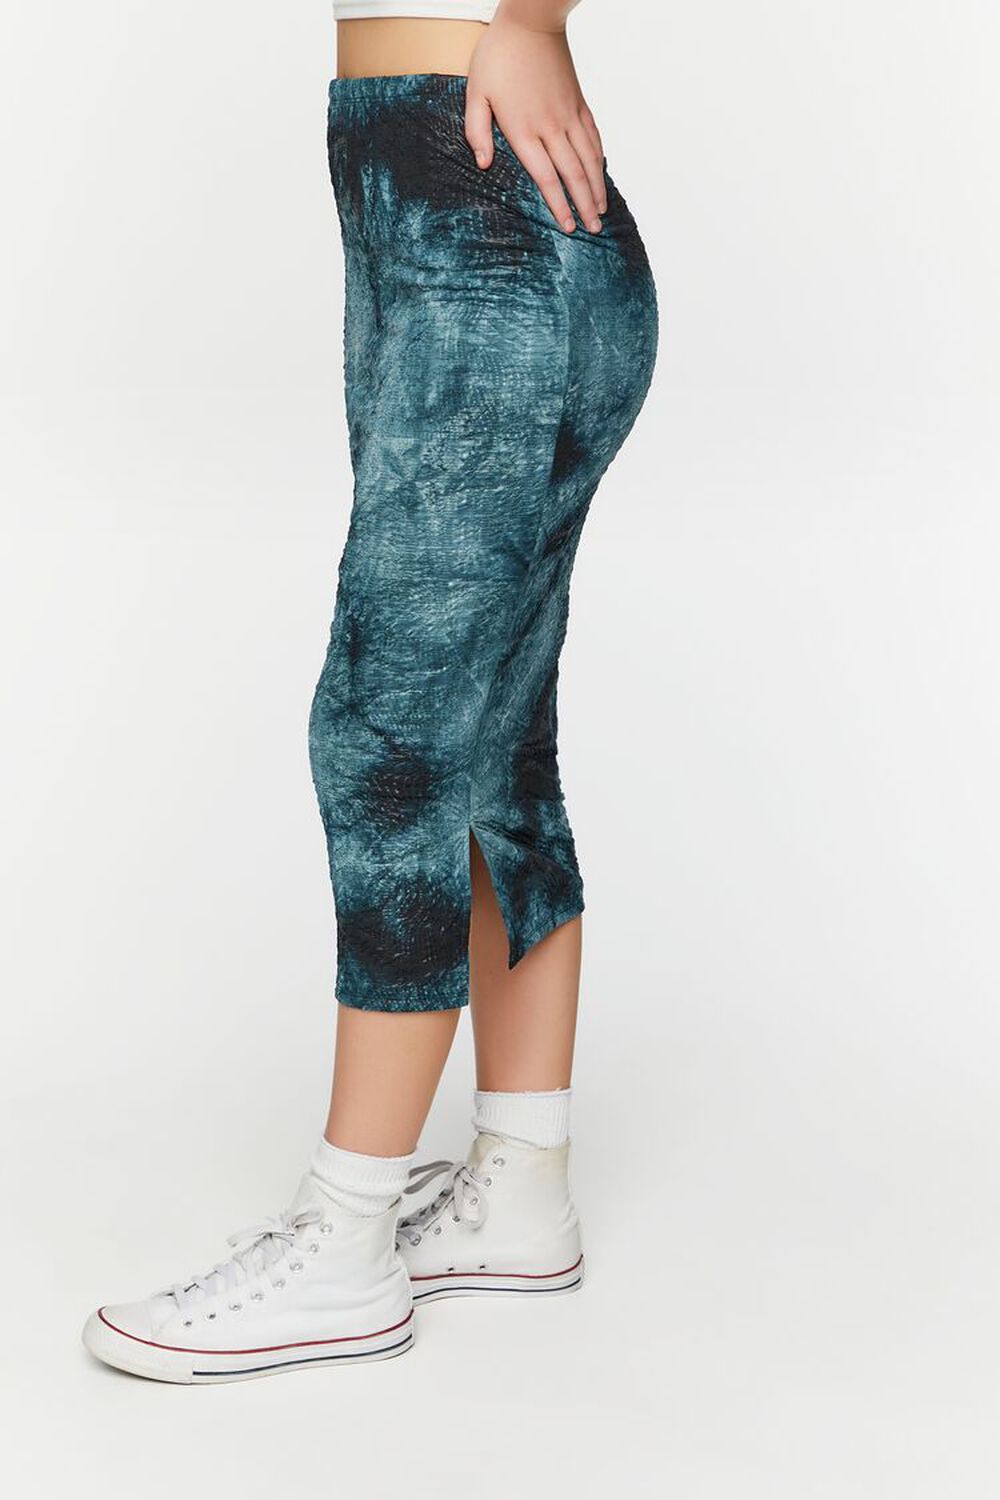 GREEN/MULTI Tie-Dye Bodycon Midi Skirt, image 3